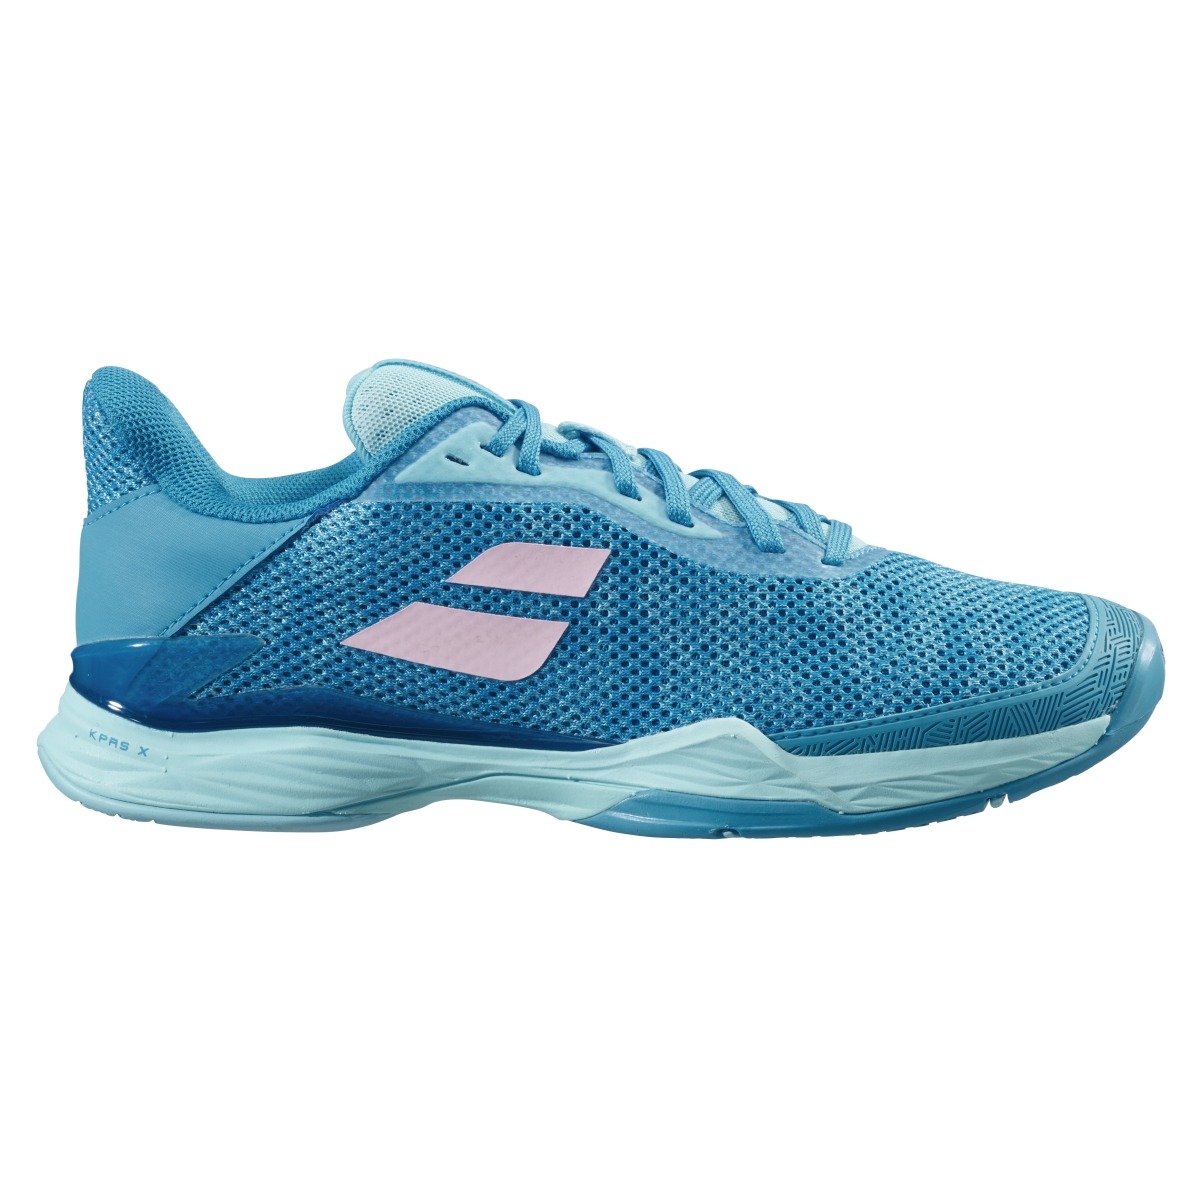 Babolat Women's Jet Tere All Court Tennis Shoe (Harbor Blue)